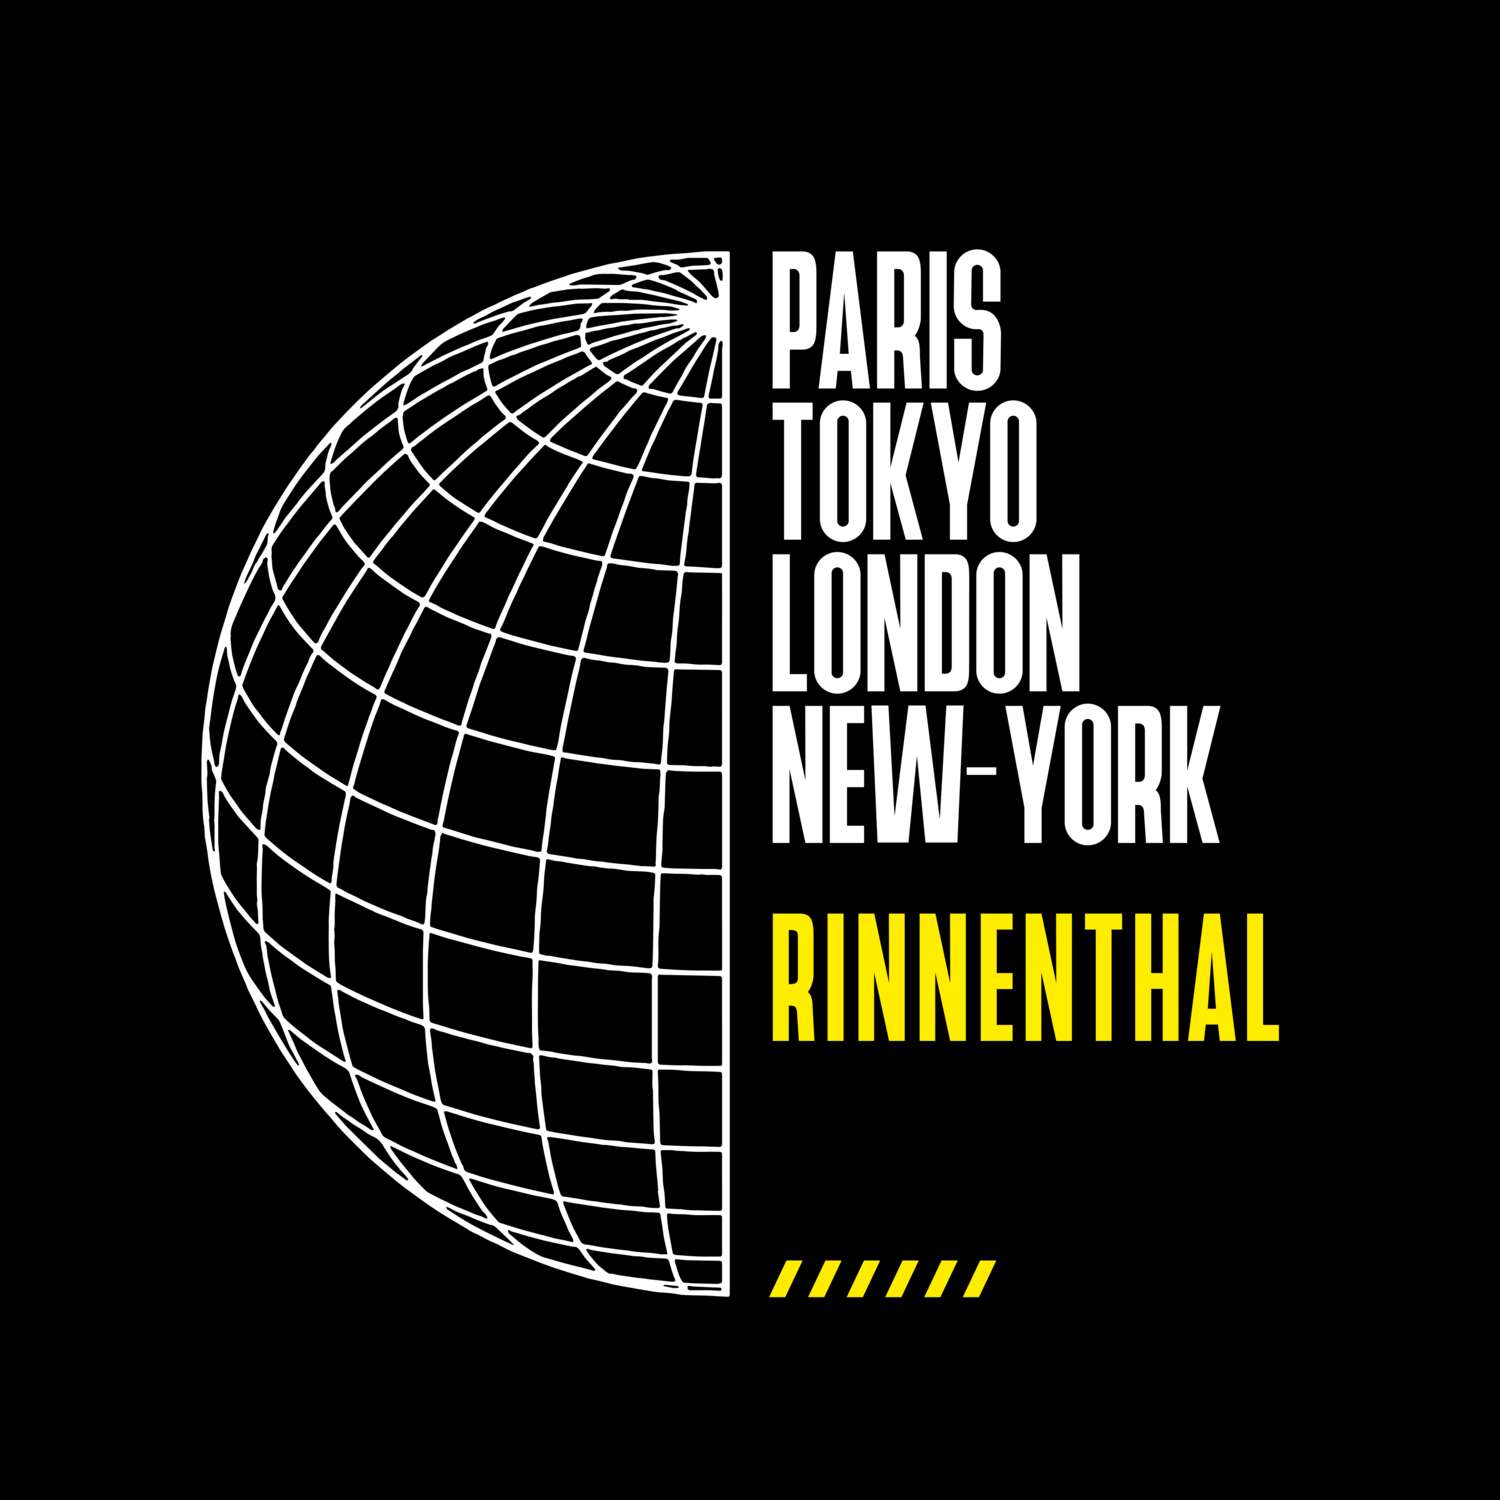 Rinnenthal T-Shirt »Paris Tokyo London«